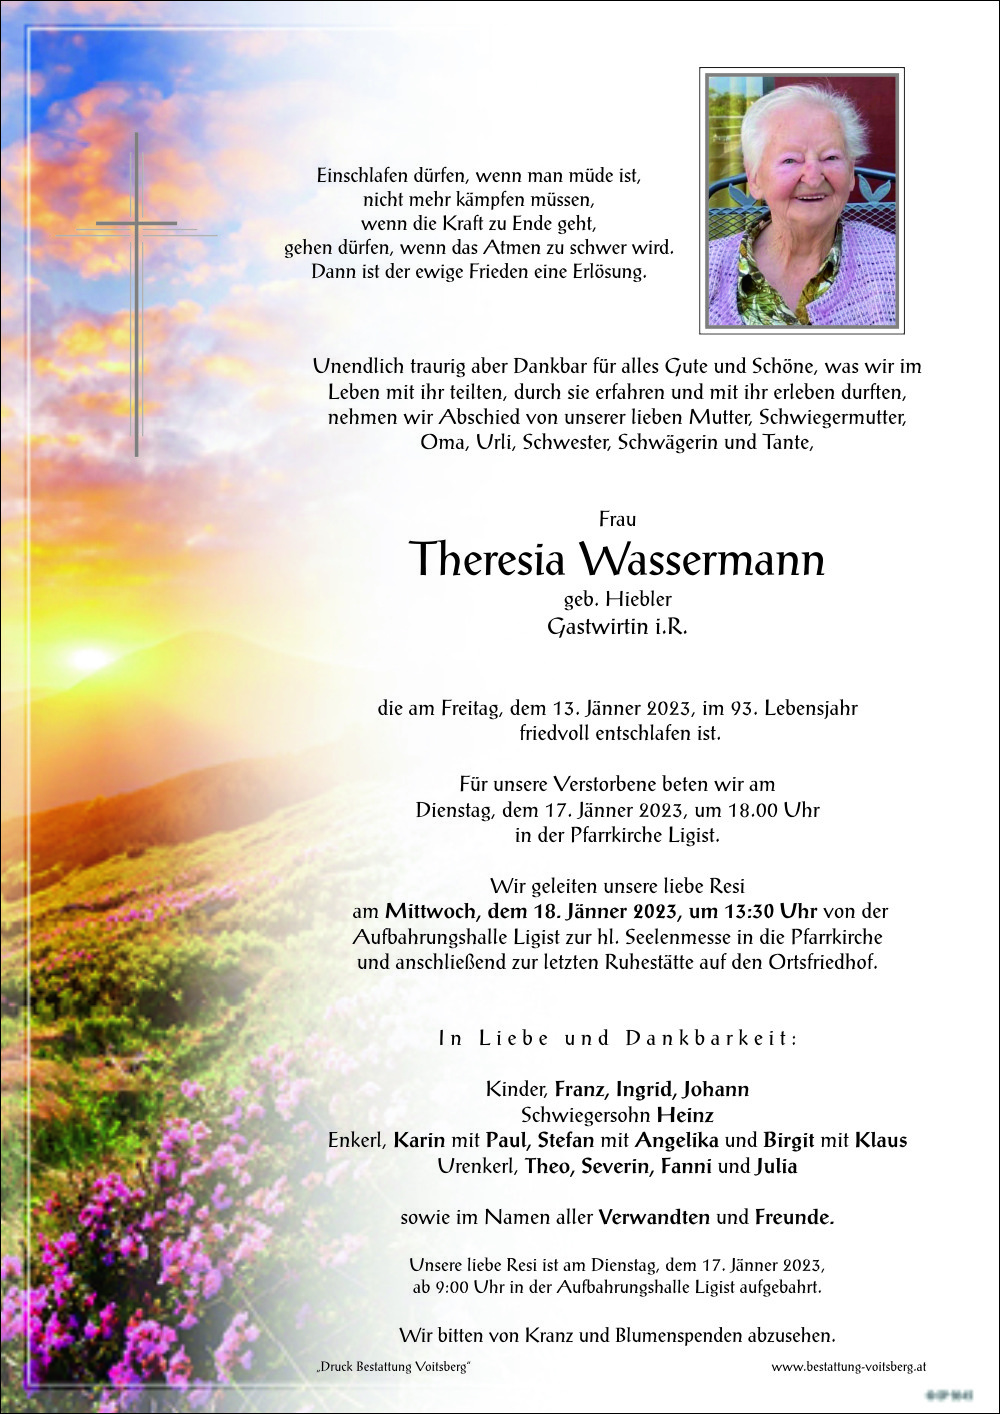 Theresia Wassermann